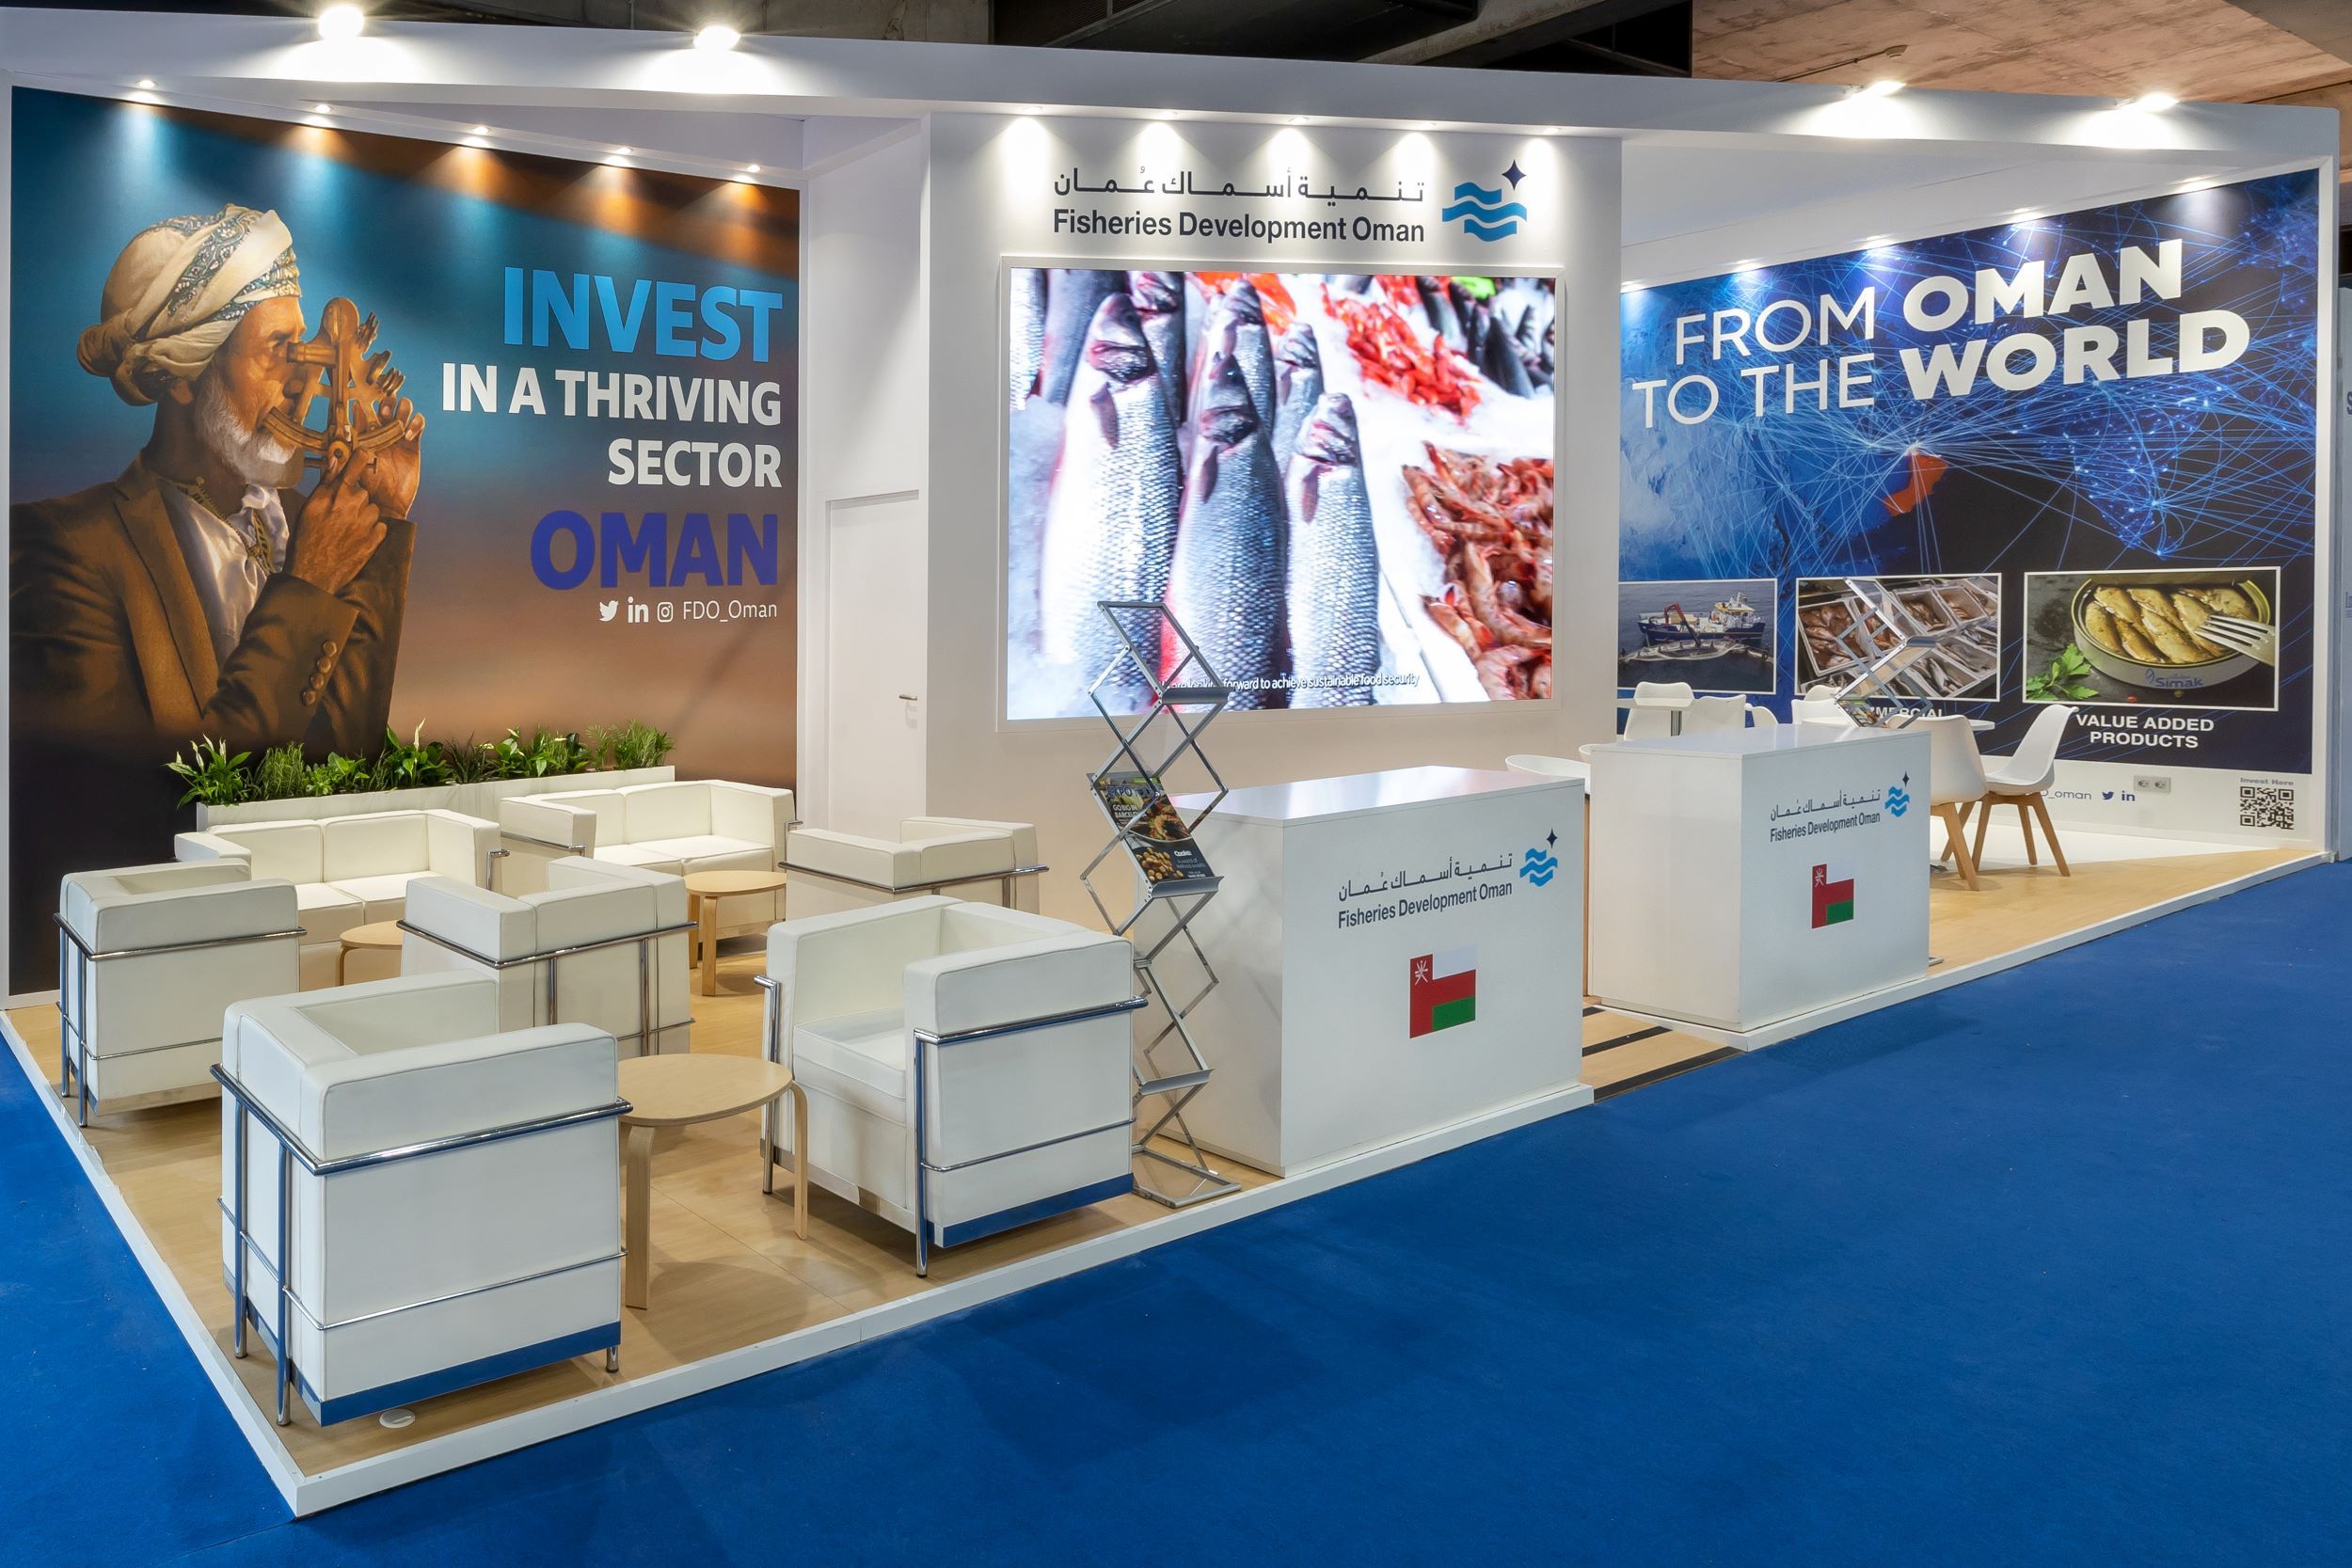 Fisheries Development Oman participa en Seafood Expo Global, cita internacional de productos del mar